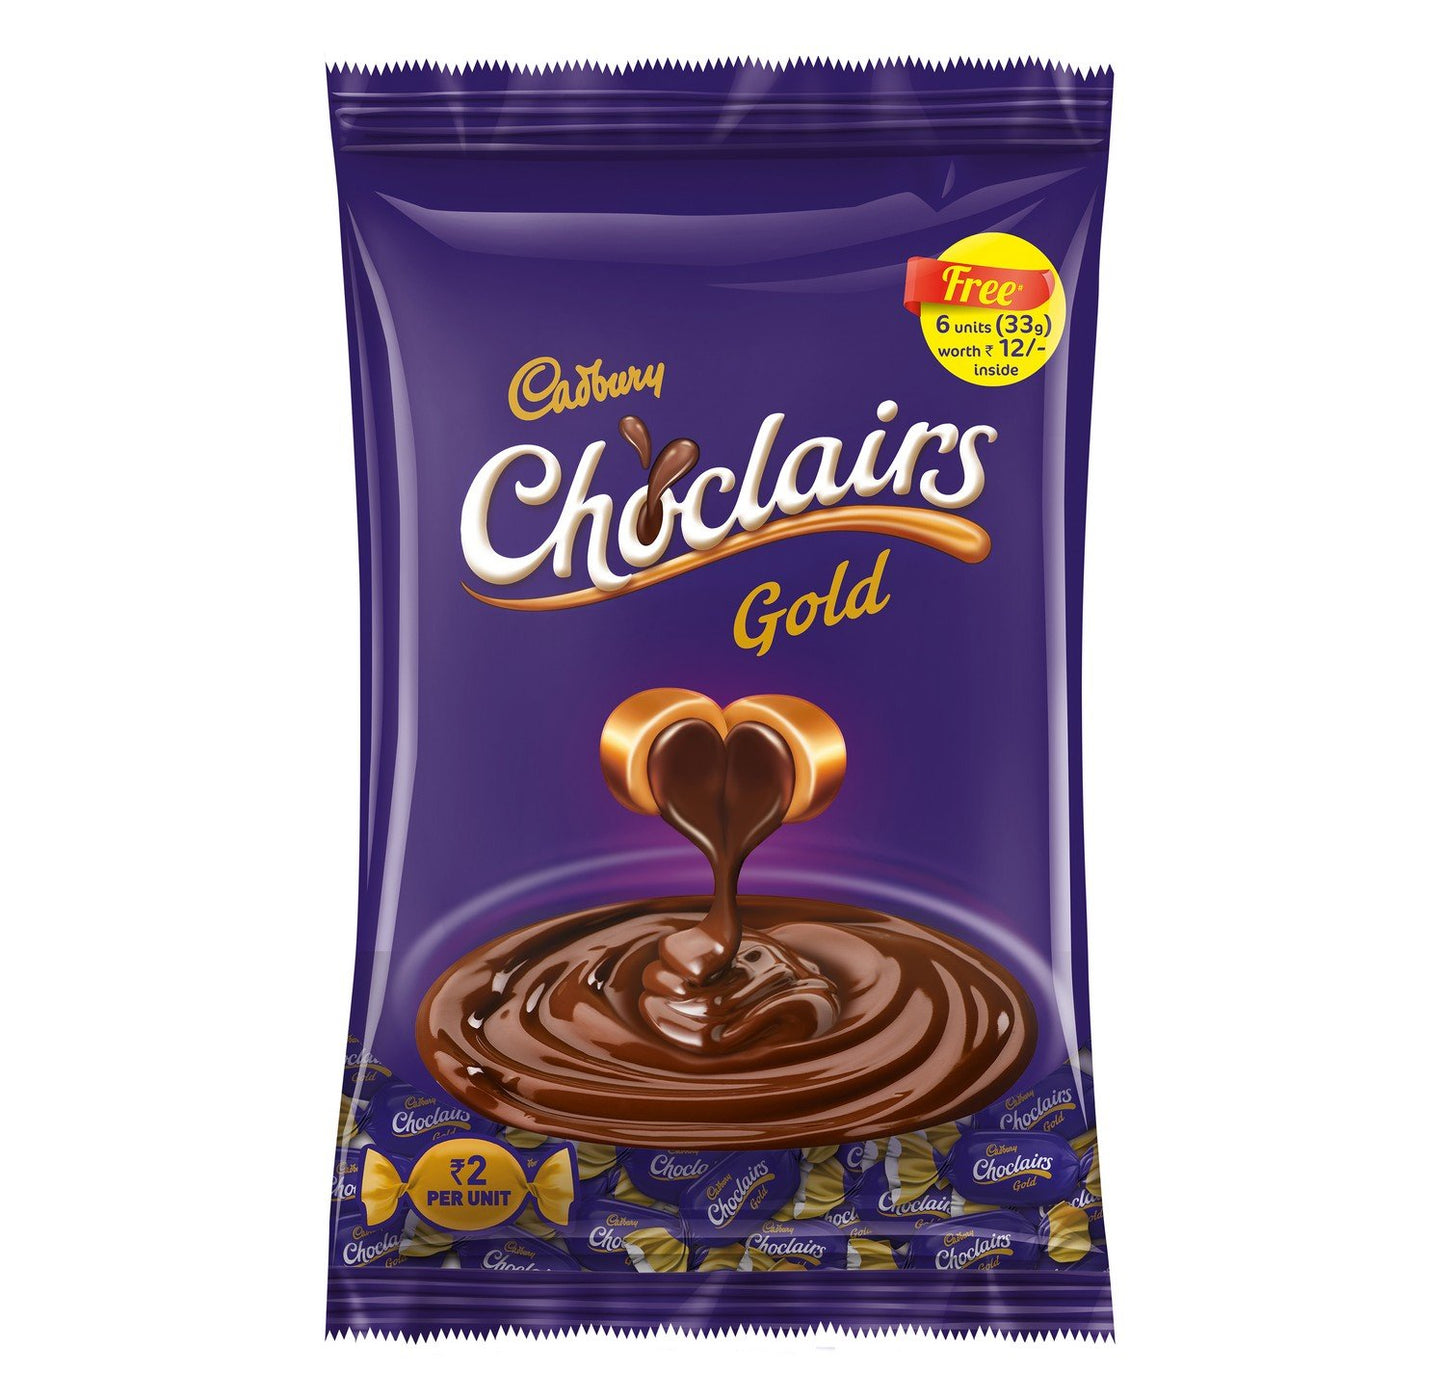 Cadbury Choclairs Gold, 330.6g Pouch (58 Units, Free 6units)